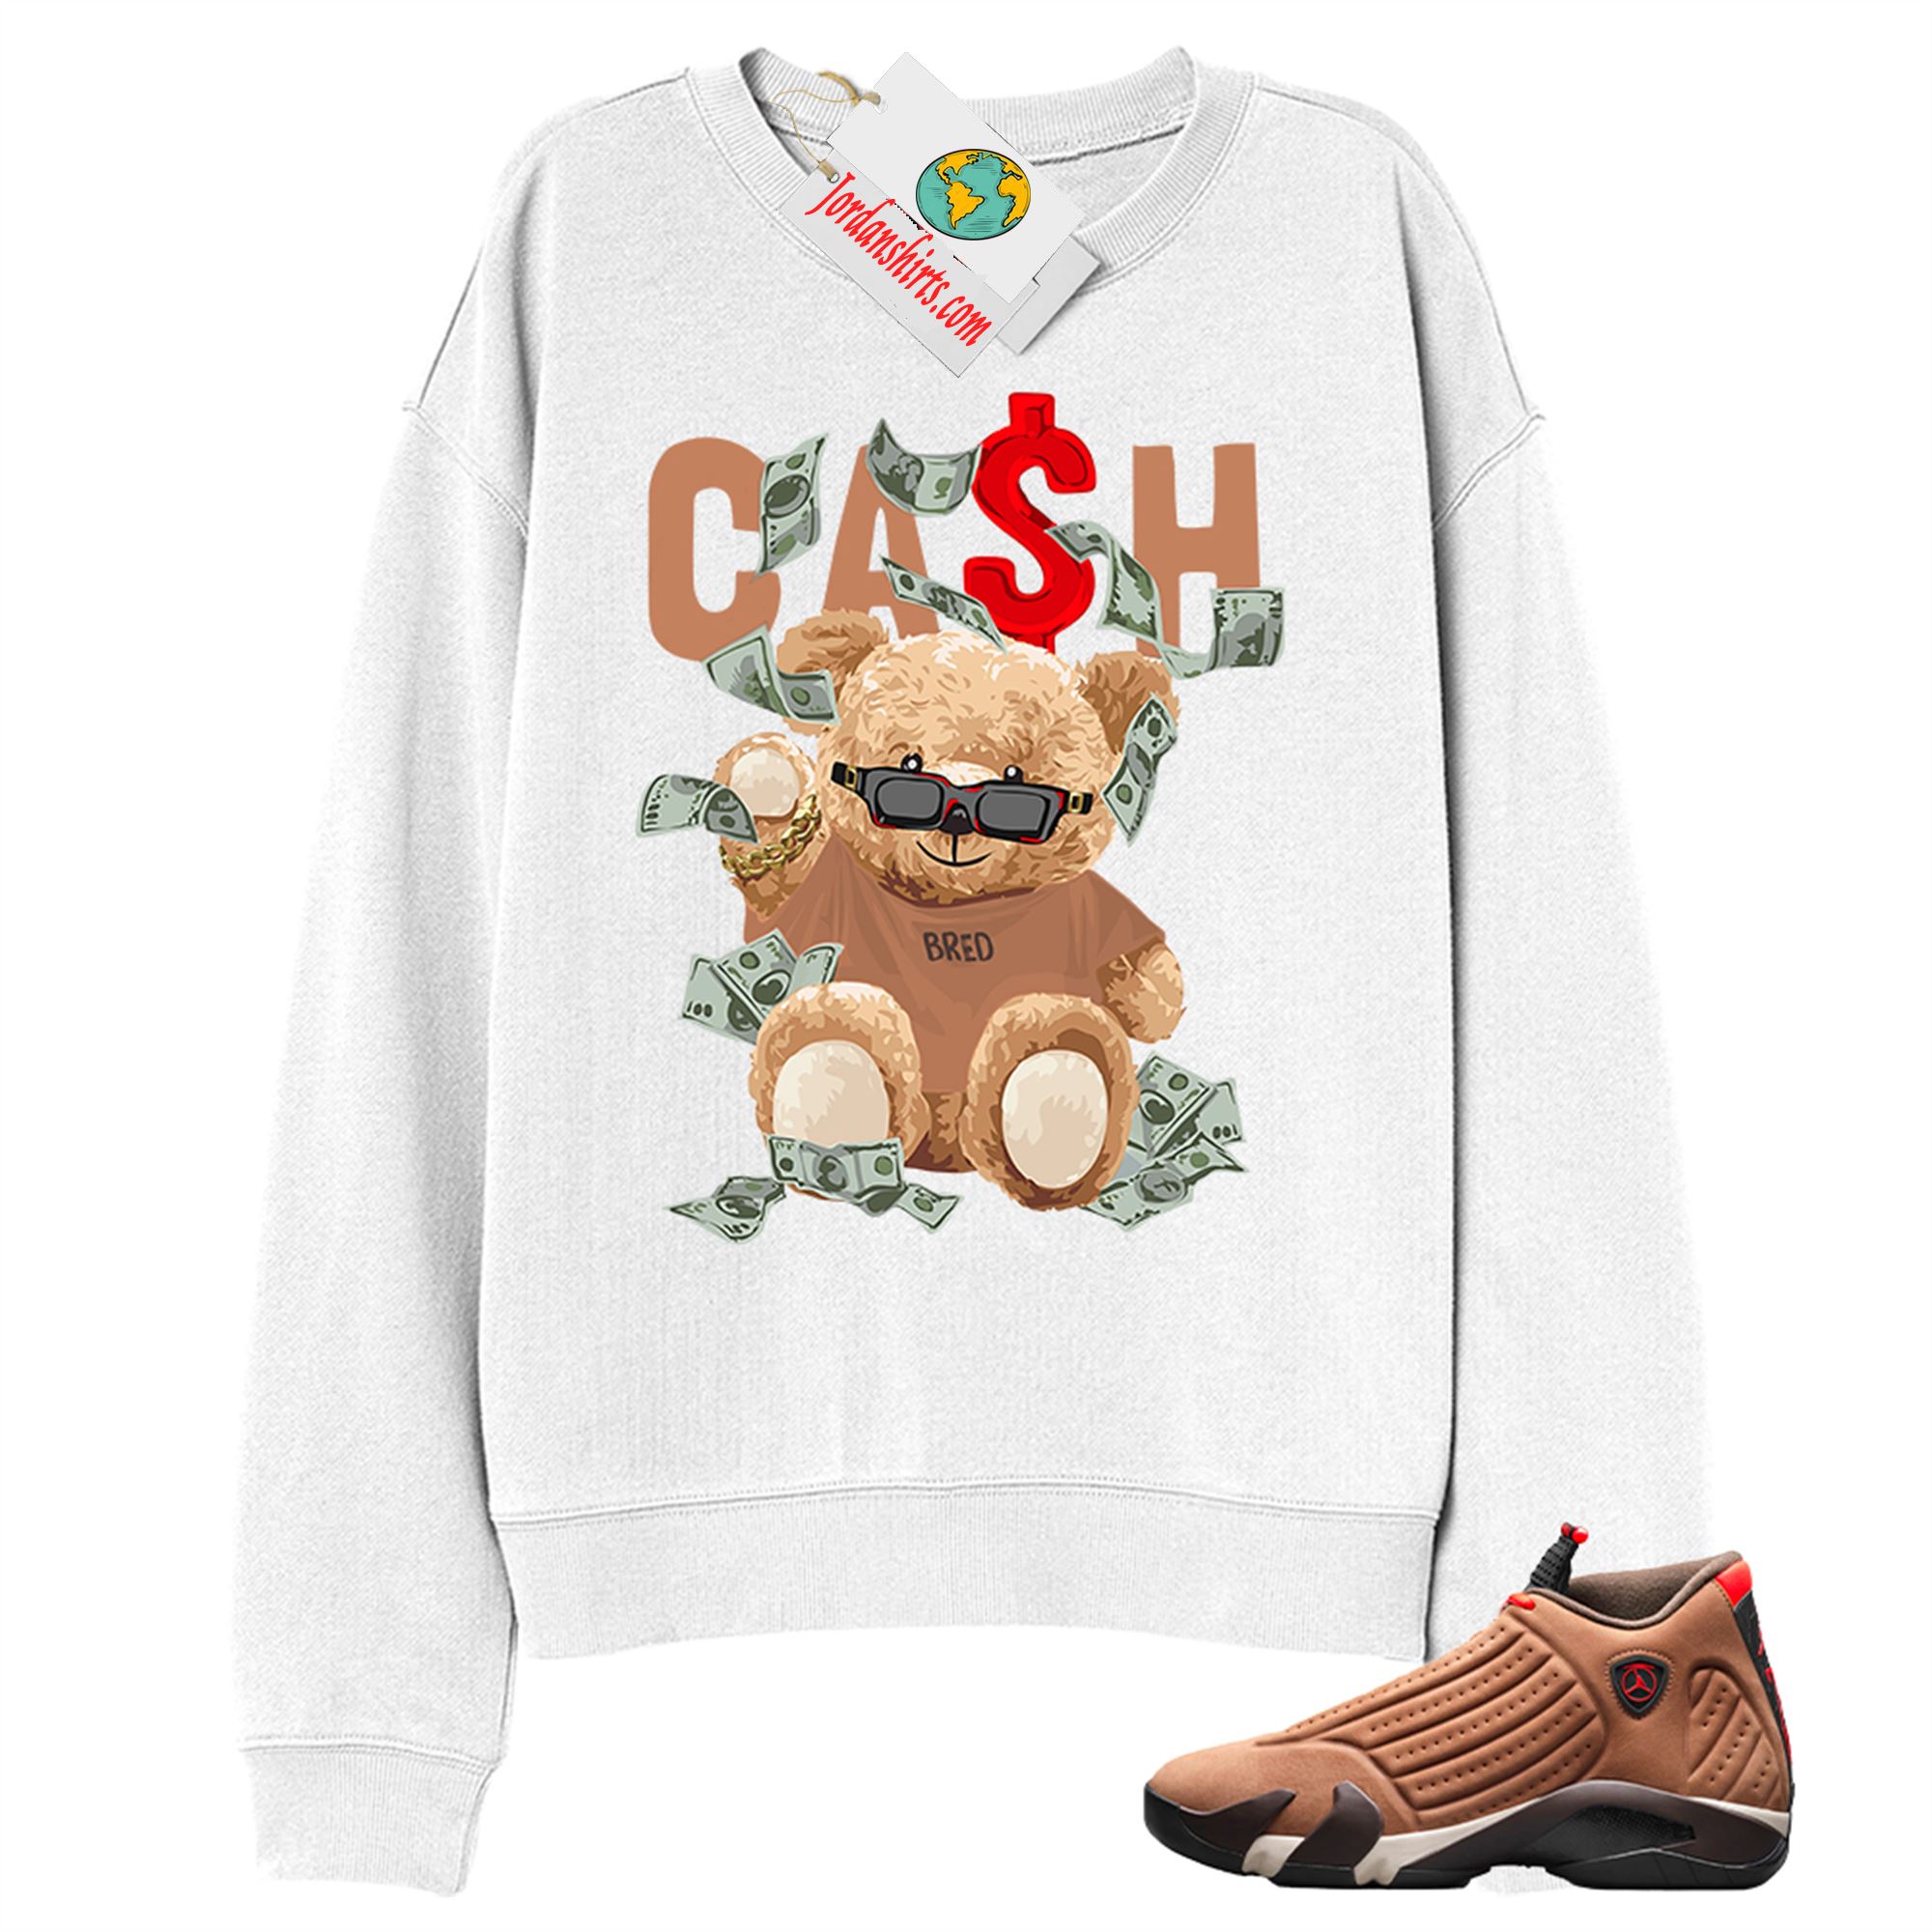 Jordan 14 Sweatshirt, Cash Teddy Bear In Sunglasses White Sweatshirt Air Jordan 14 Winterized 14s Size Up To 5xl